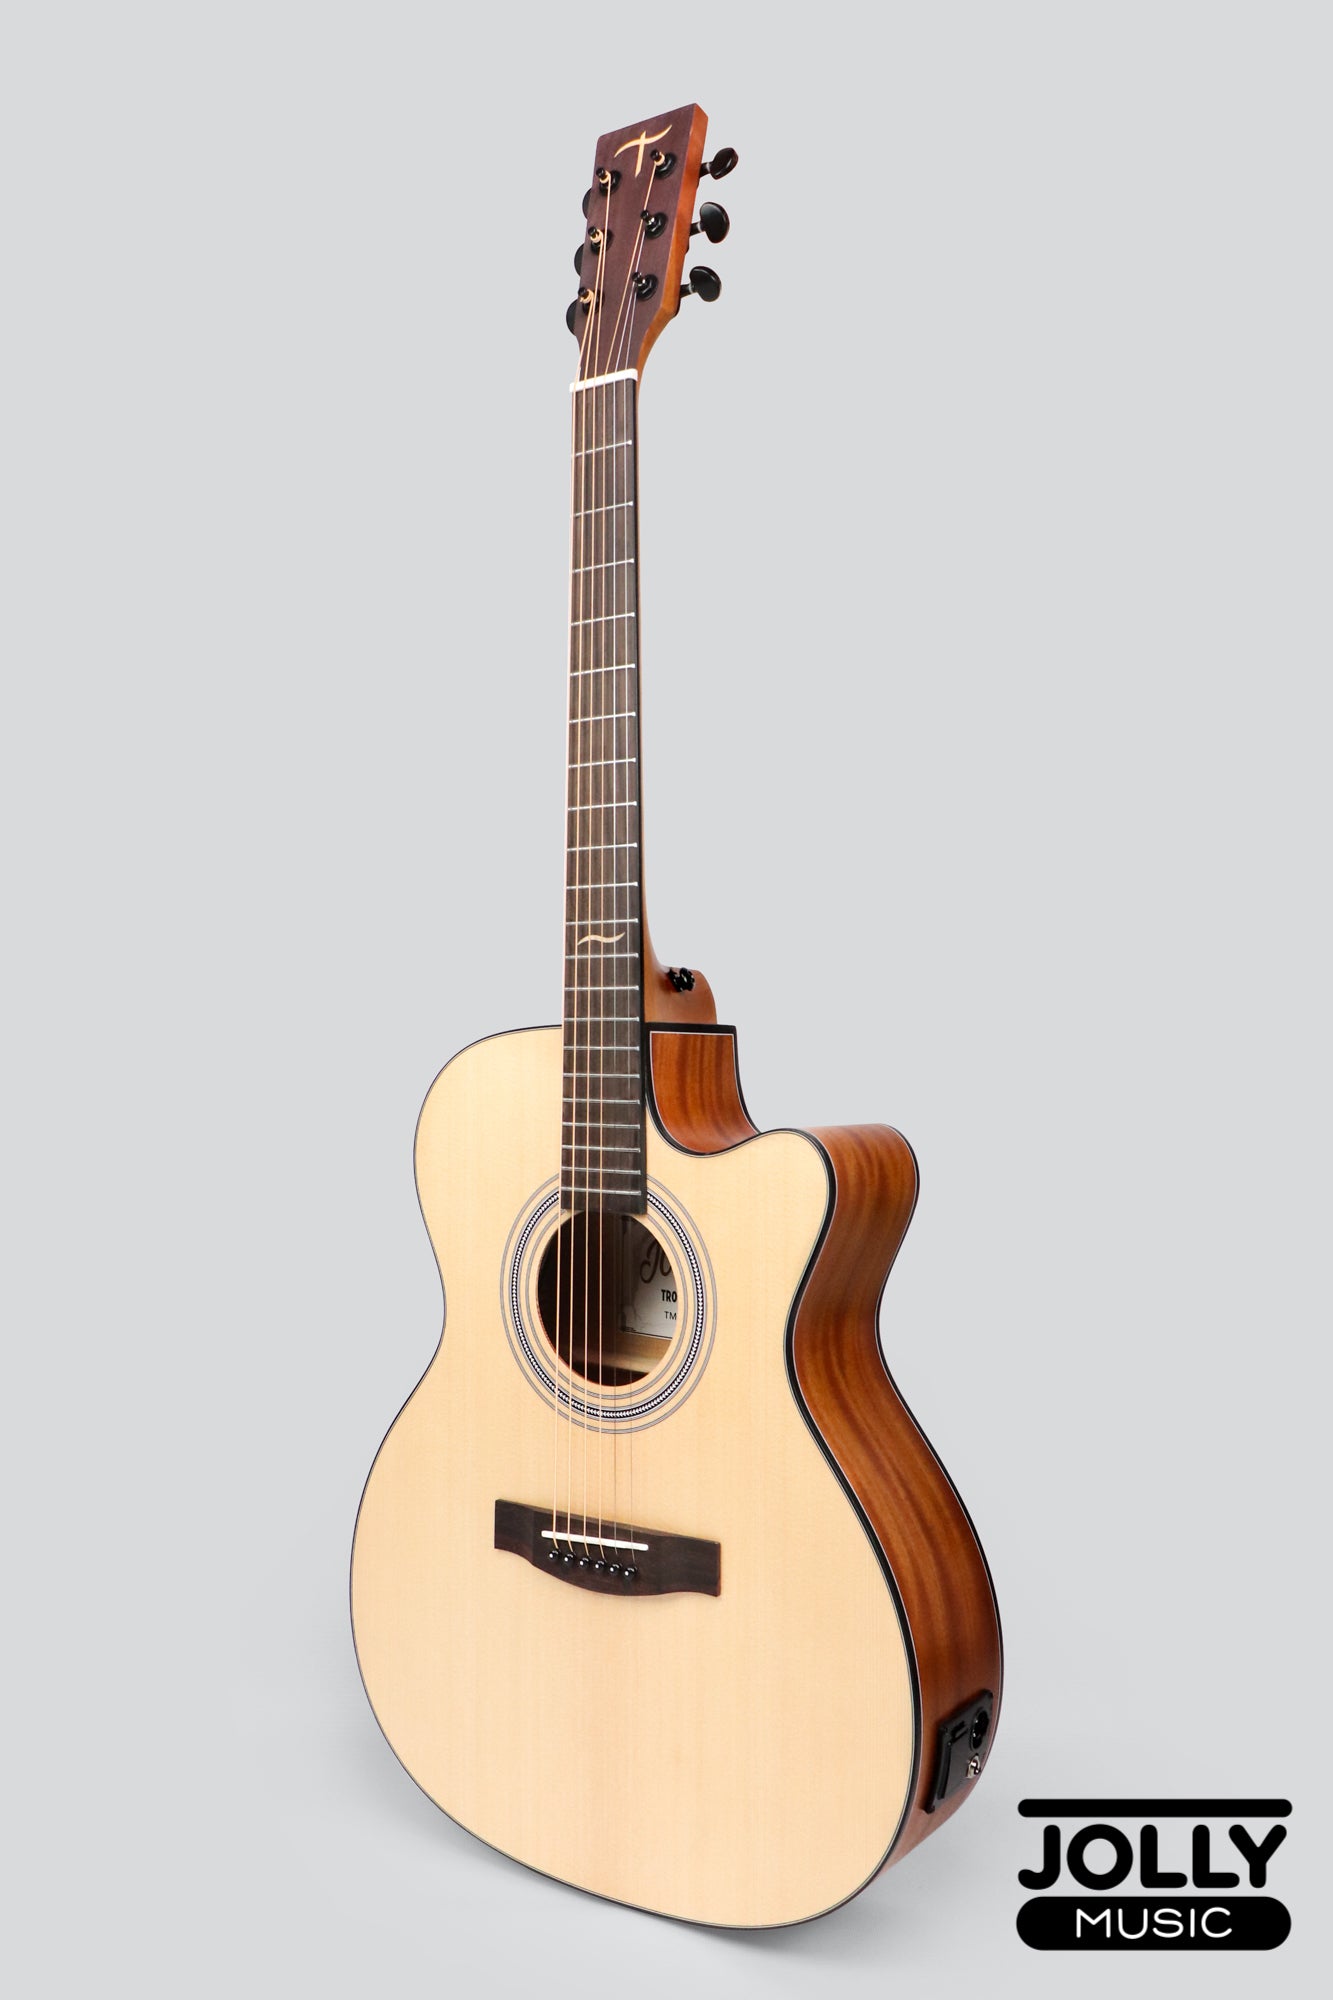 JCraft Troubadour TM-16C PRO Solid Top Orchestra Dual Pickup Mic Blend Acoustic-Electric Guitar with soft case